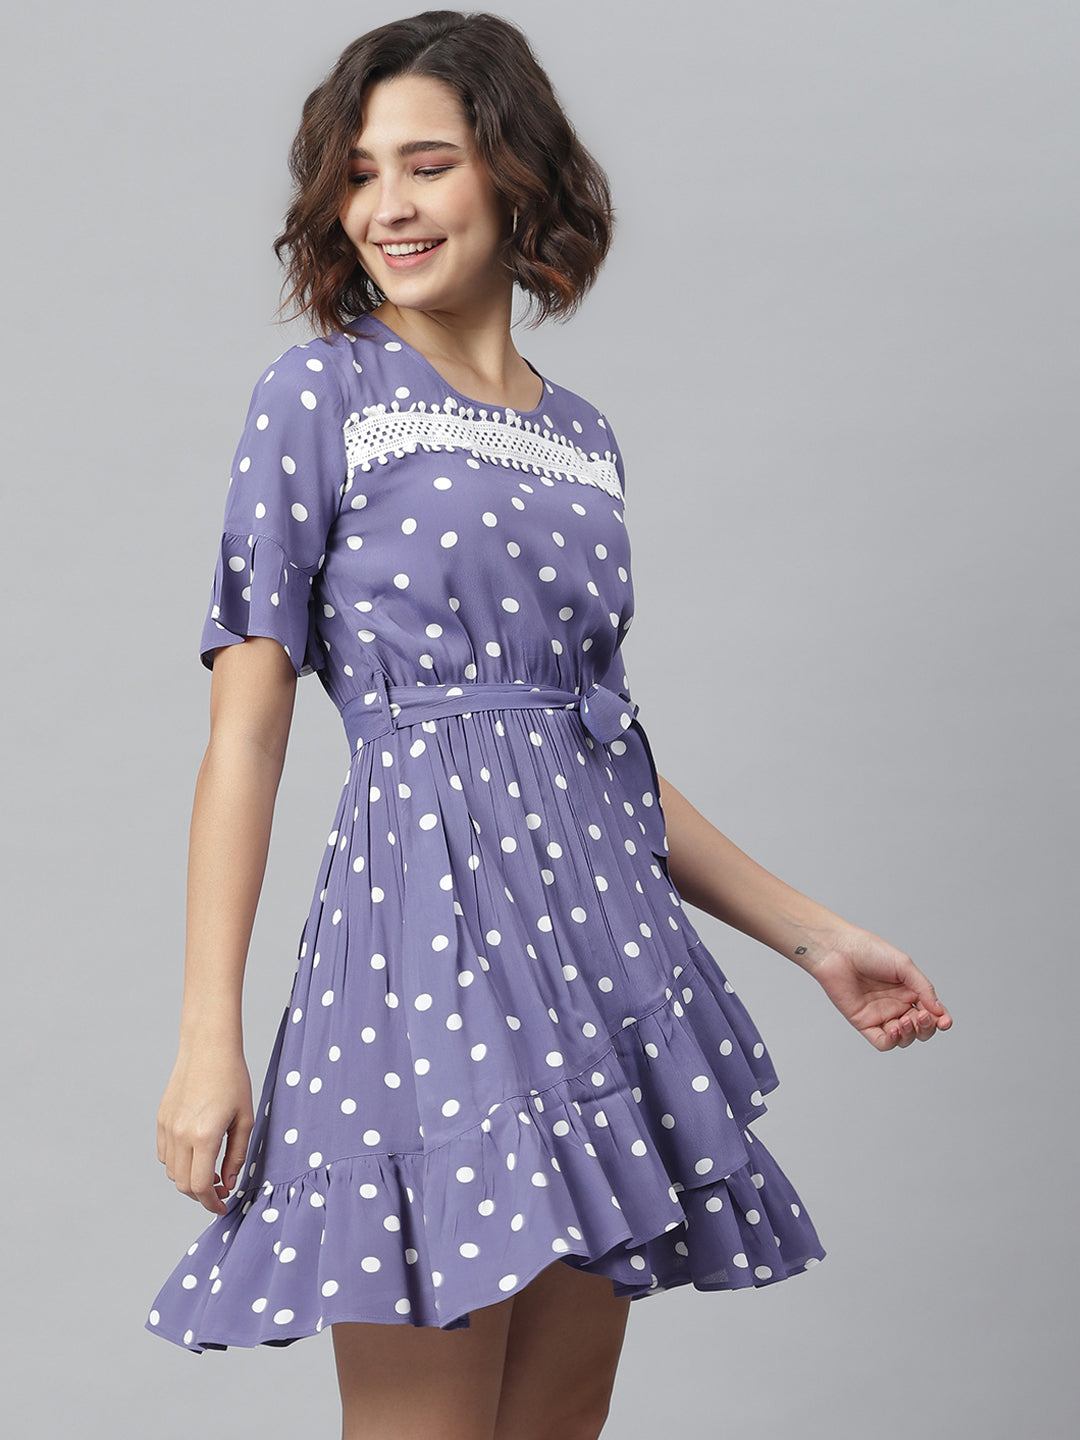 Women's Lavender Polka Dress with Lace detail - StyleStone